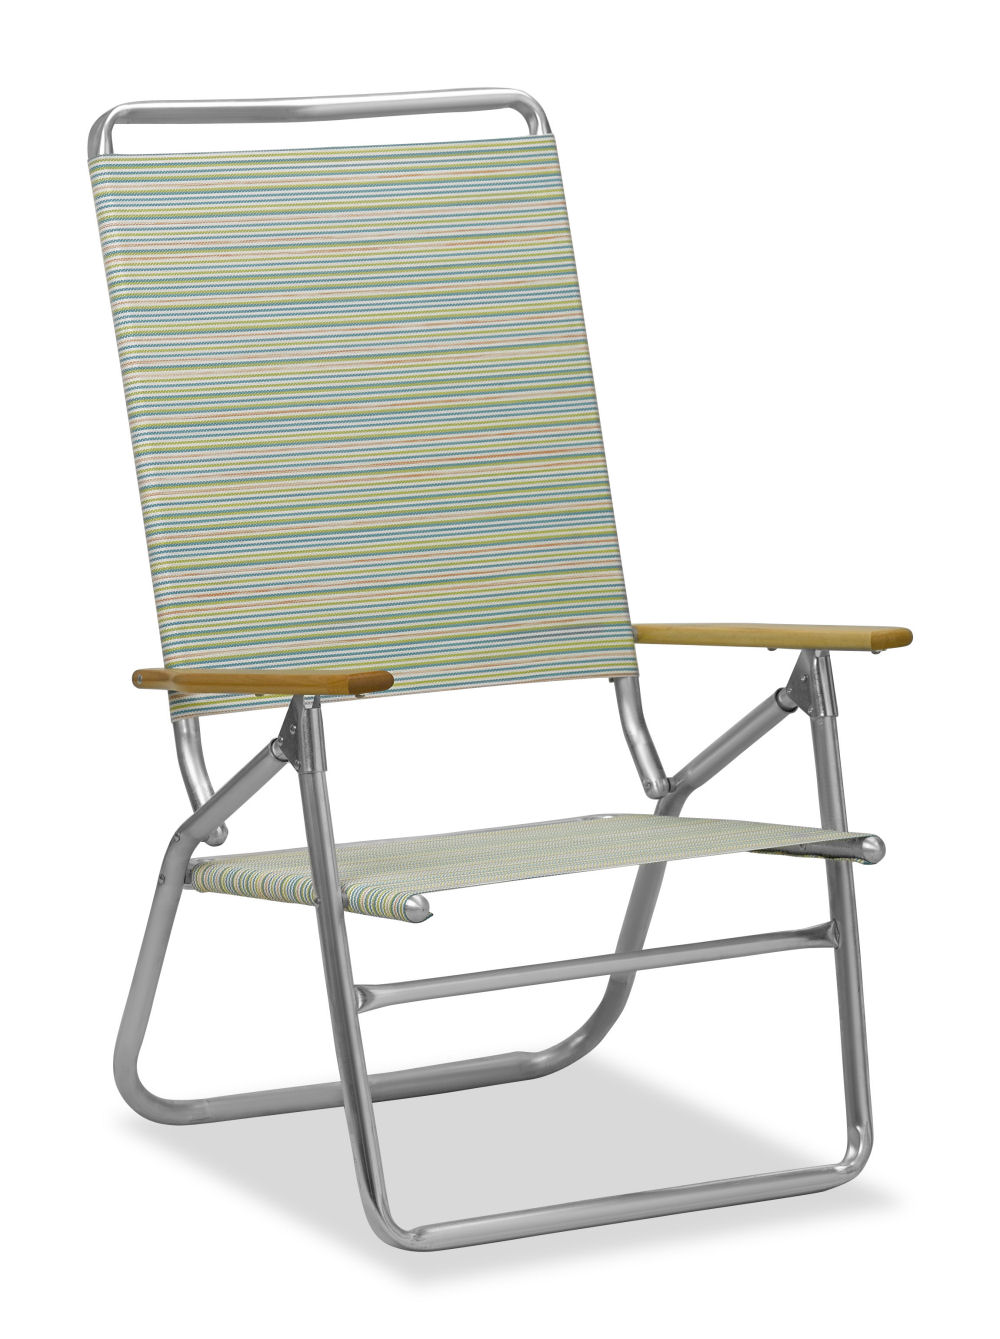 Adjustable High Boy Beach Chair Tc 711 At Atlantic Patio